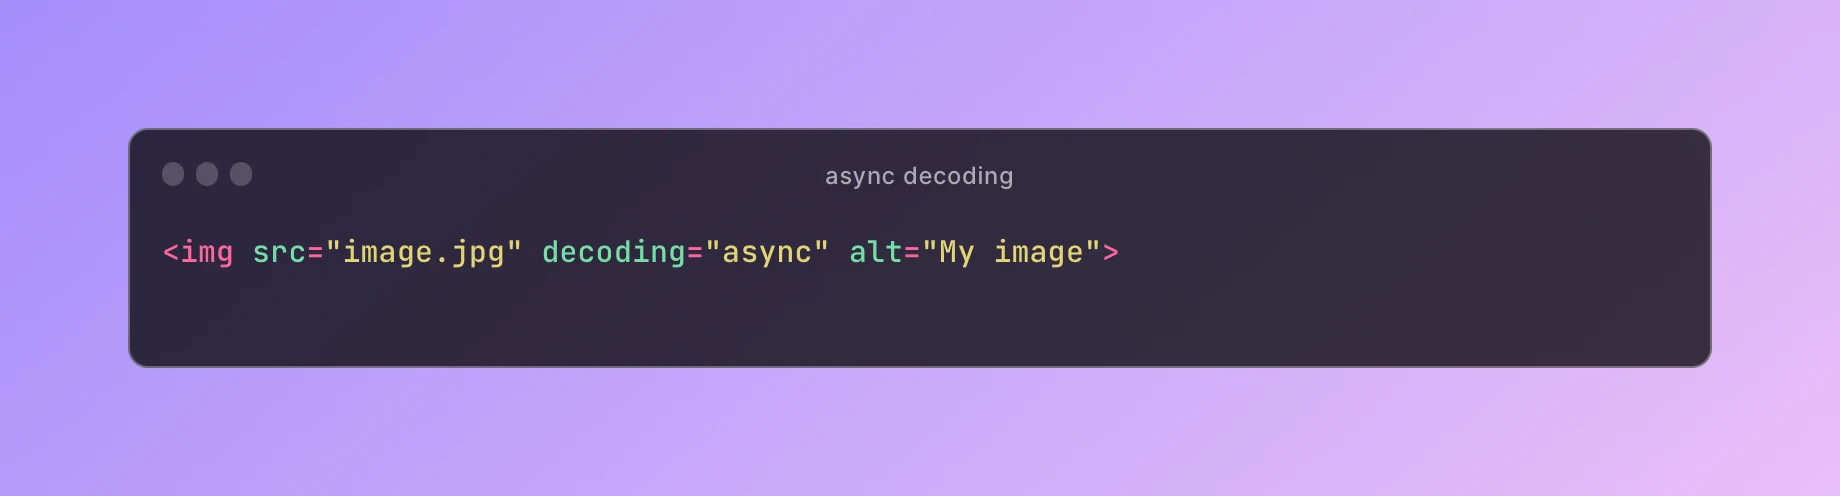 Optimizing images with async decoding